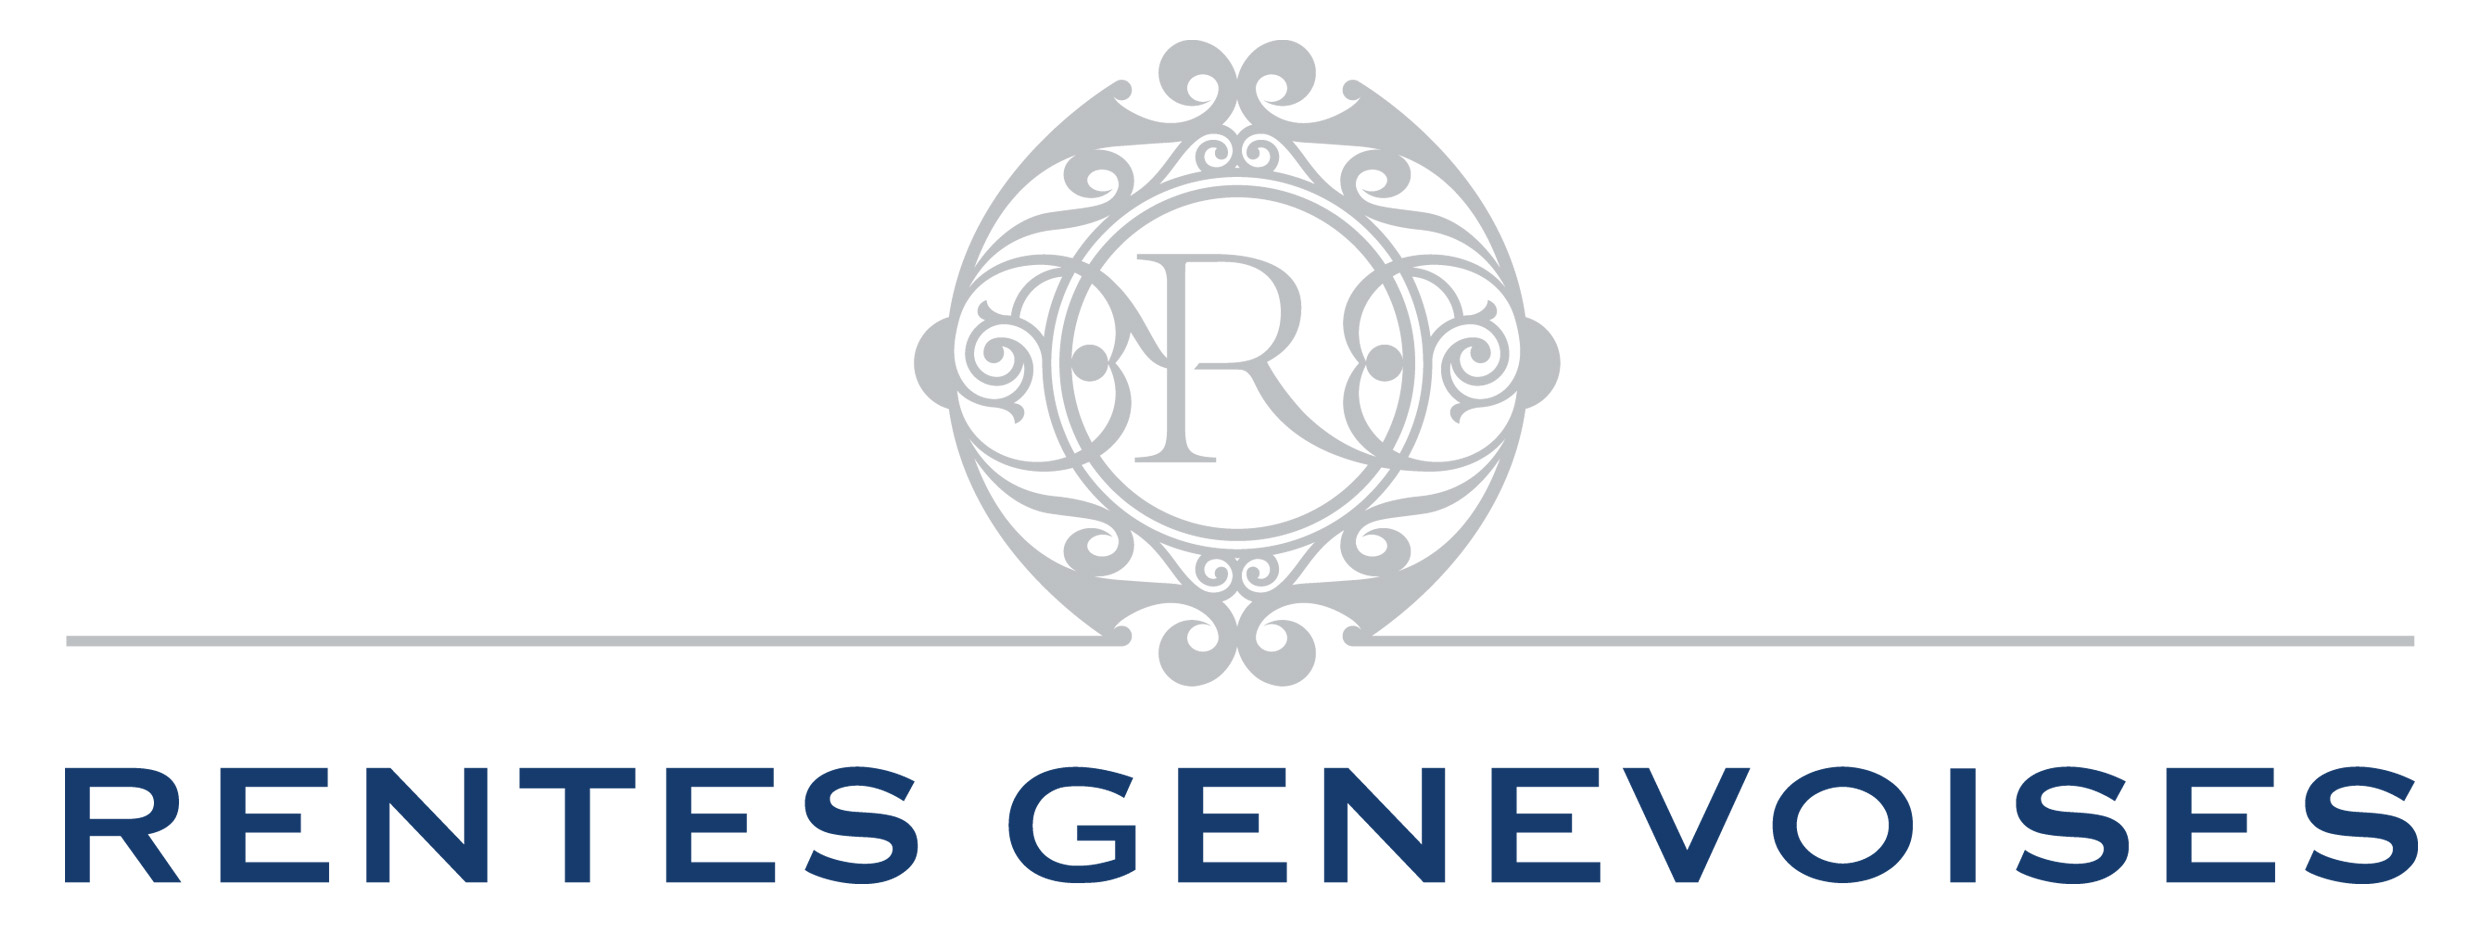 rentes-genevoises-logo-grand-format